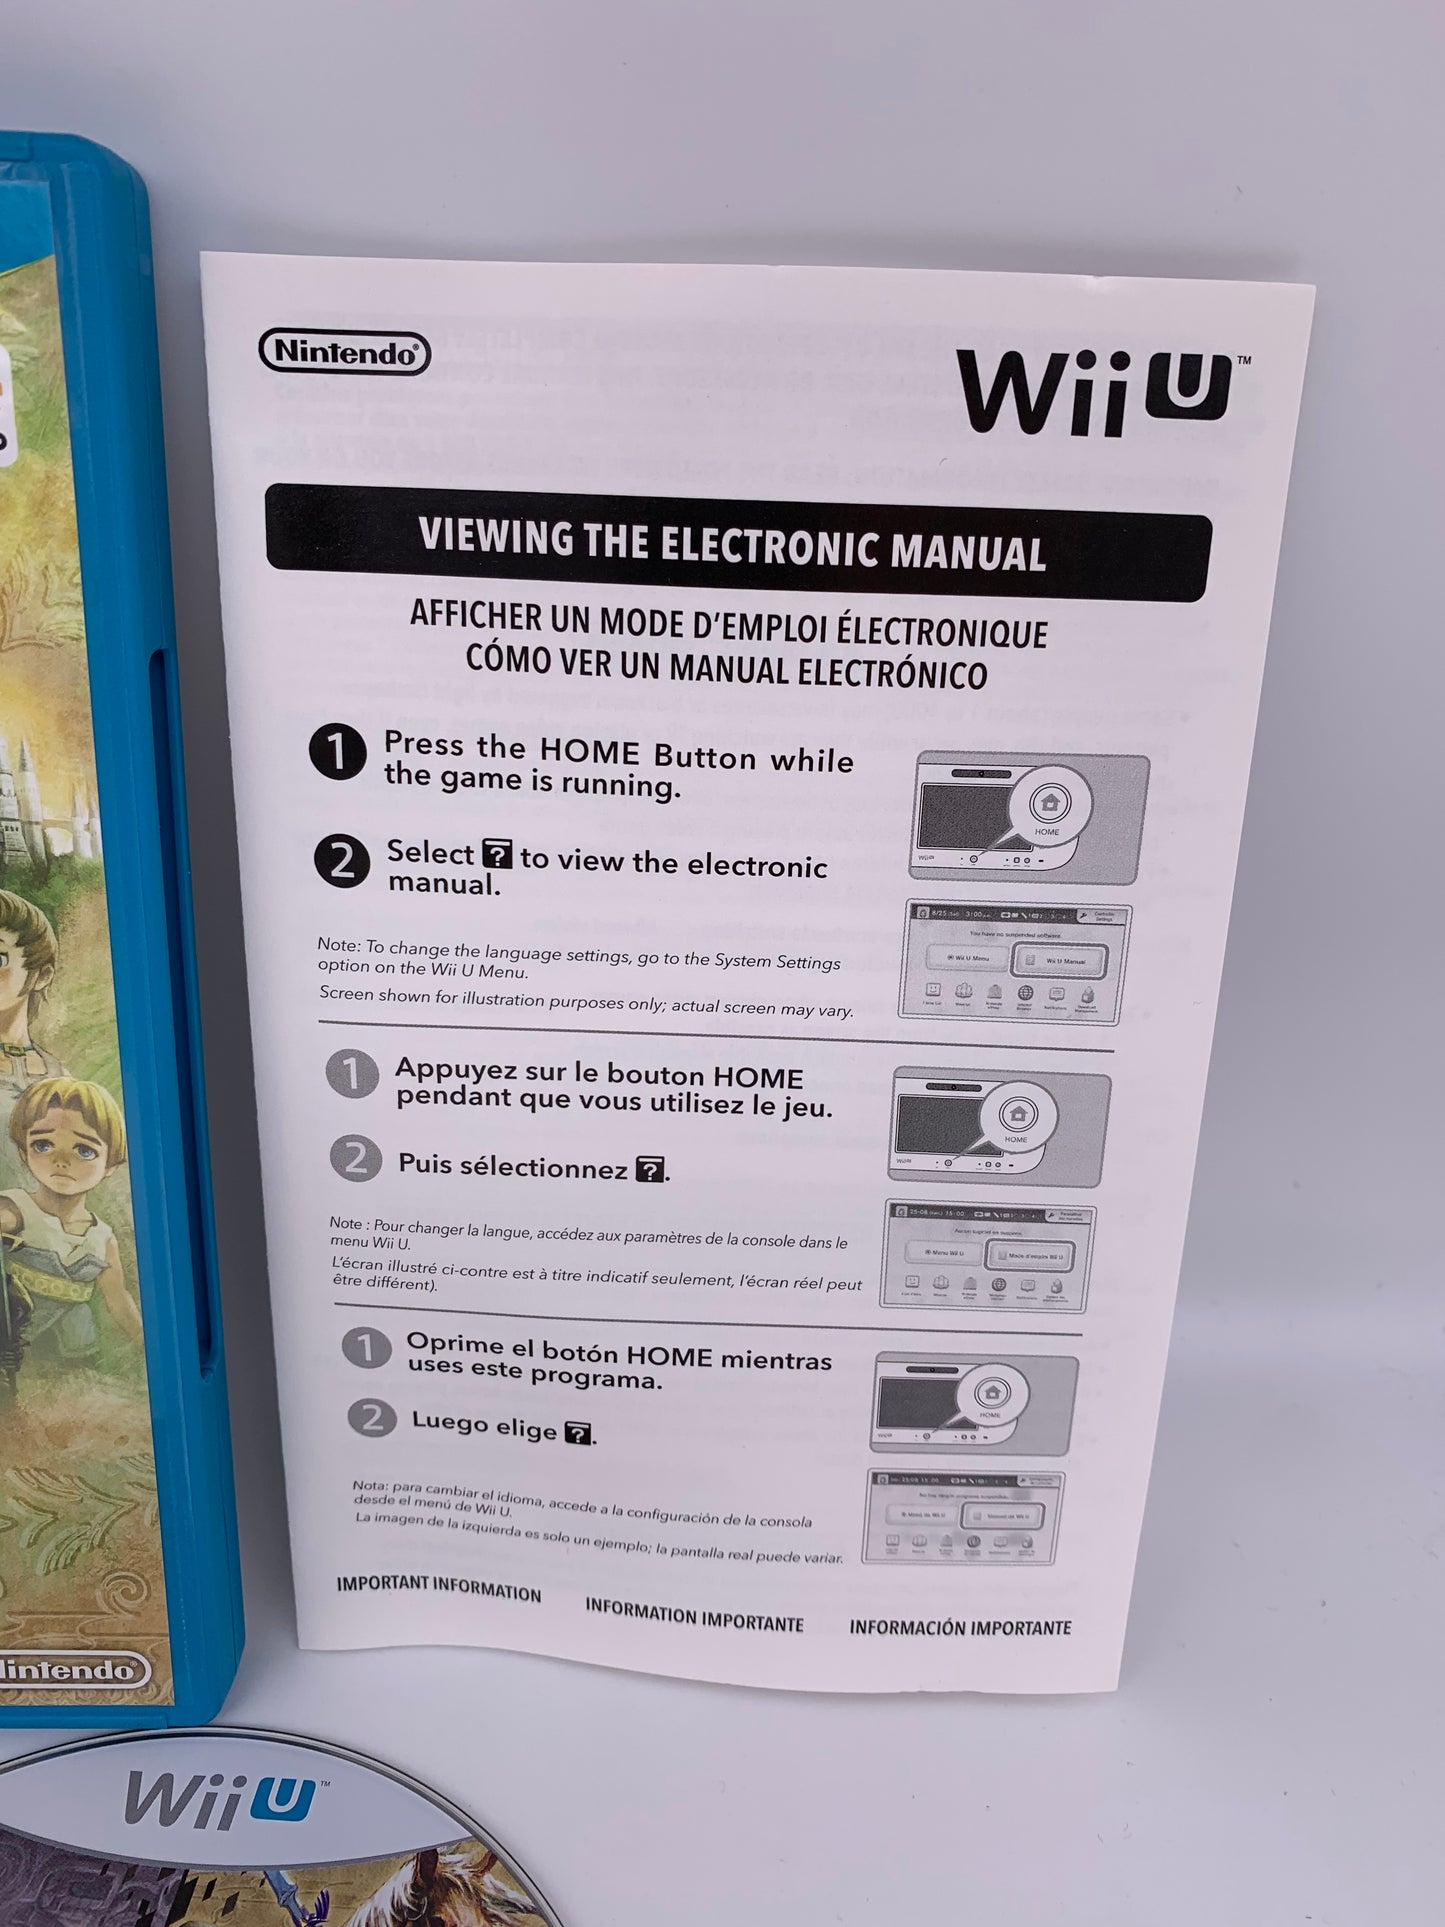 NiNTENDO Wii U | THE LEGEND OF ZELDA TWiLiGHT PRiNCESS HD